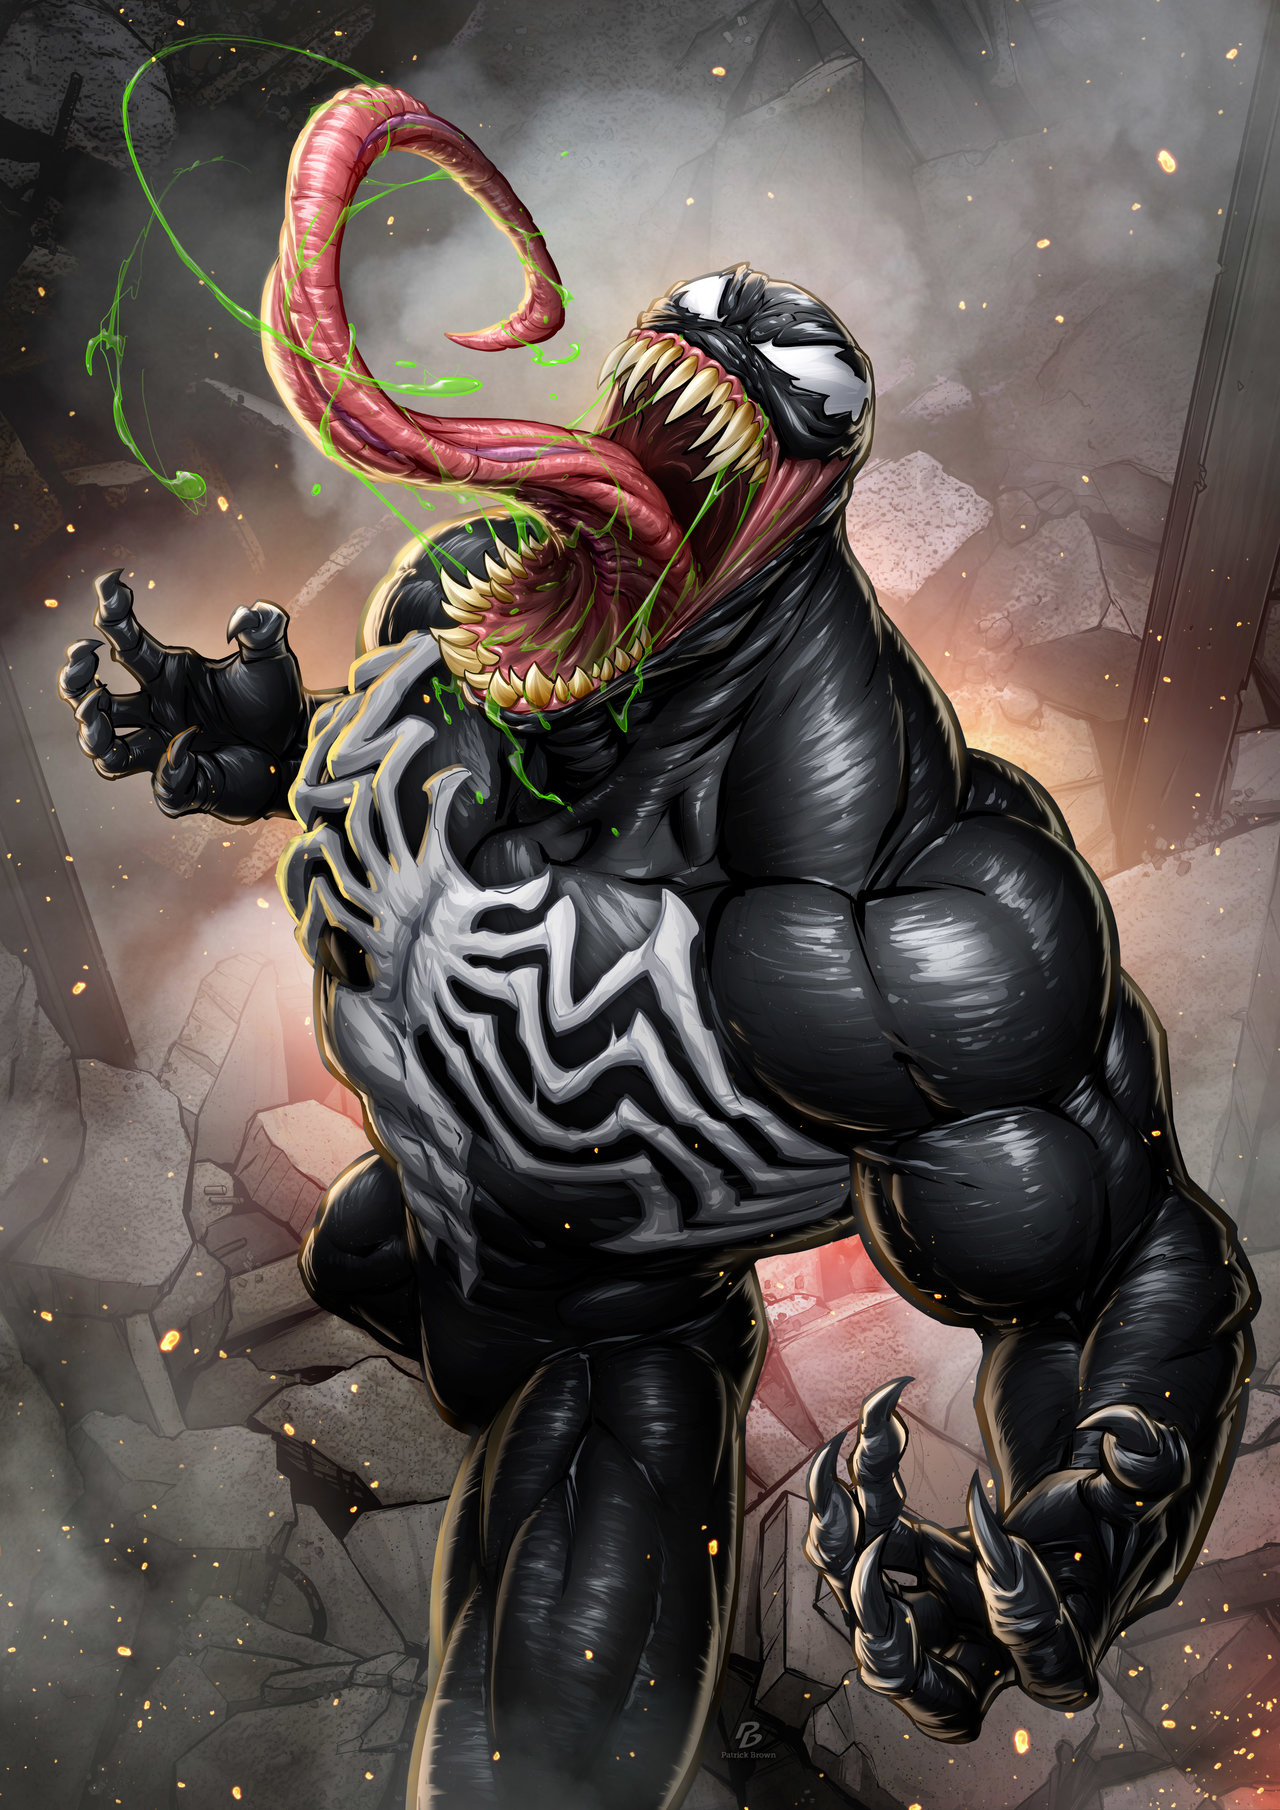 General 1280x1810 Patrick Brown Venom mist sparks tongues teeth claws Symbiote muscular Spider-Man Marvel Comics